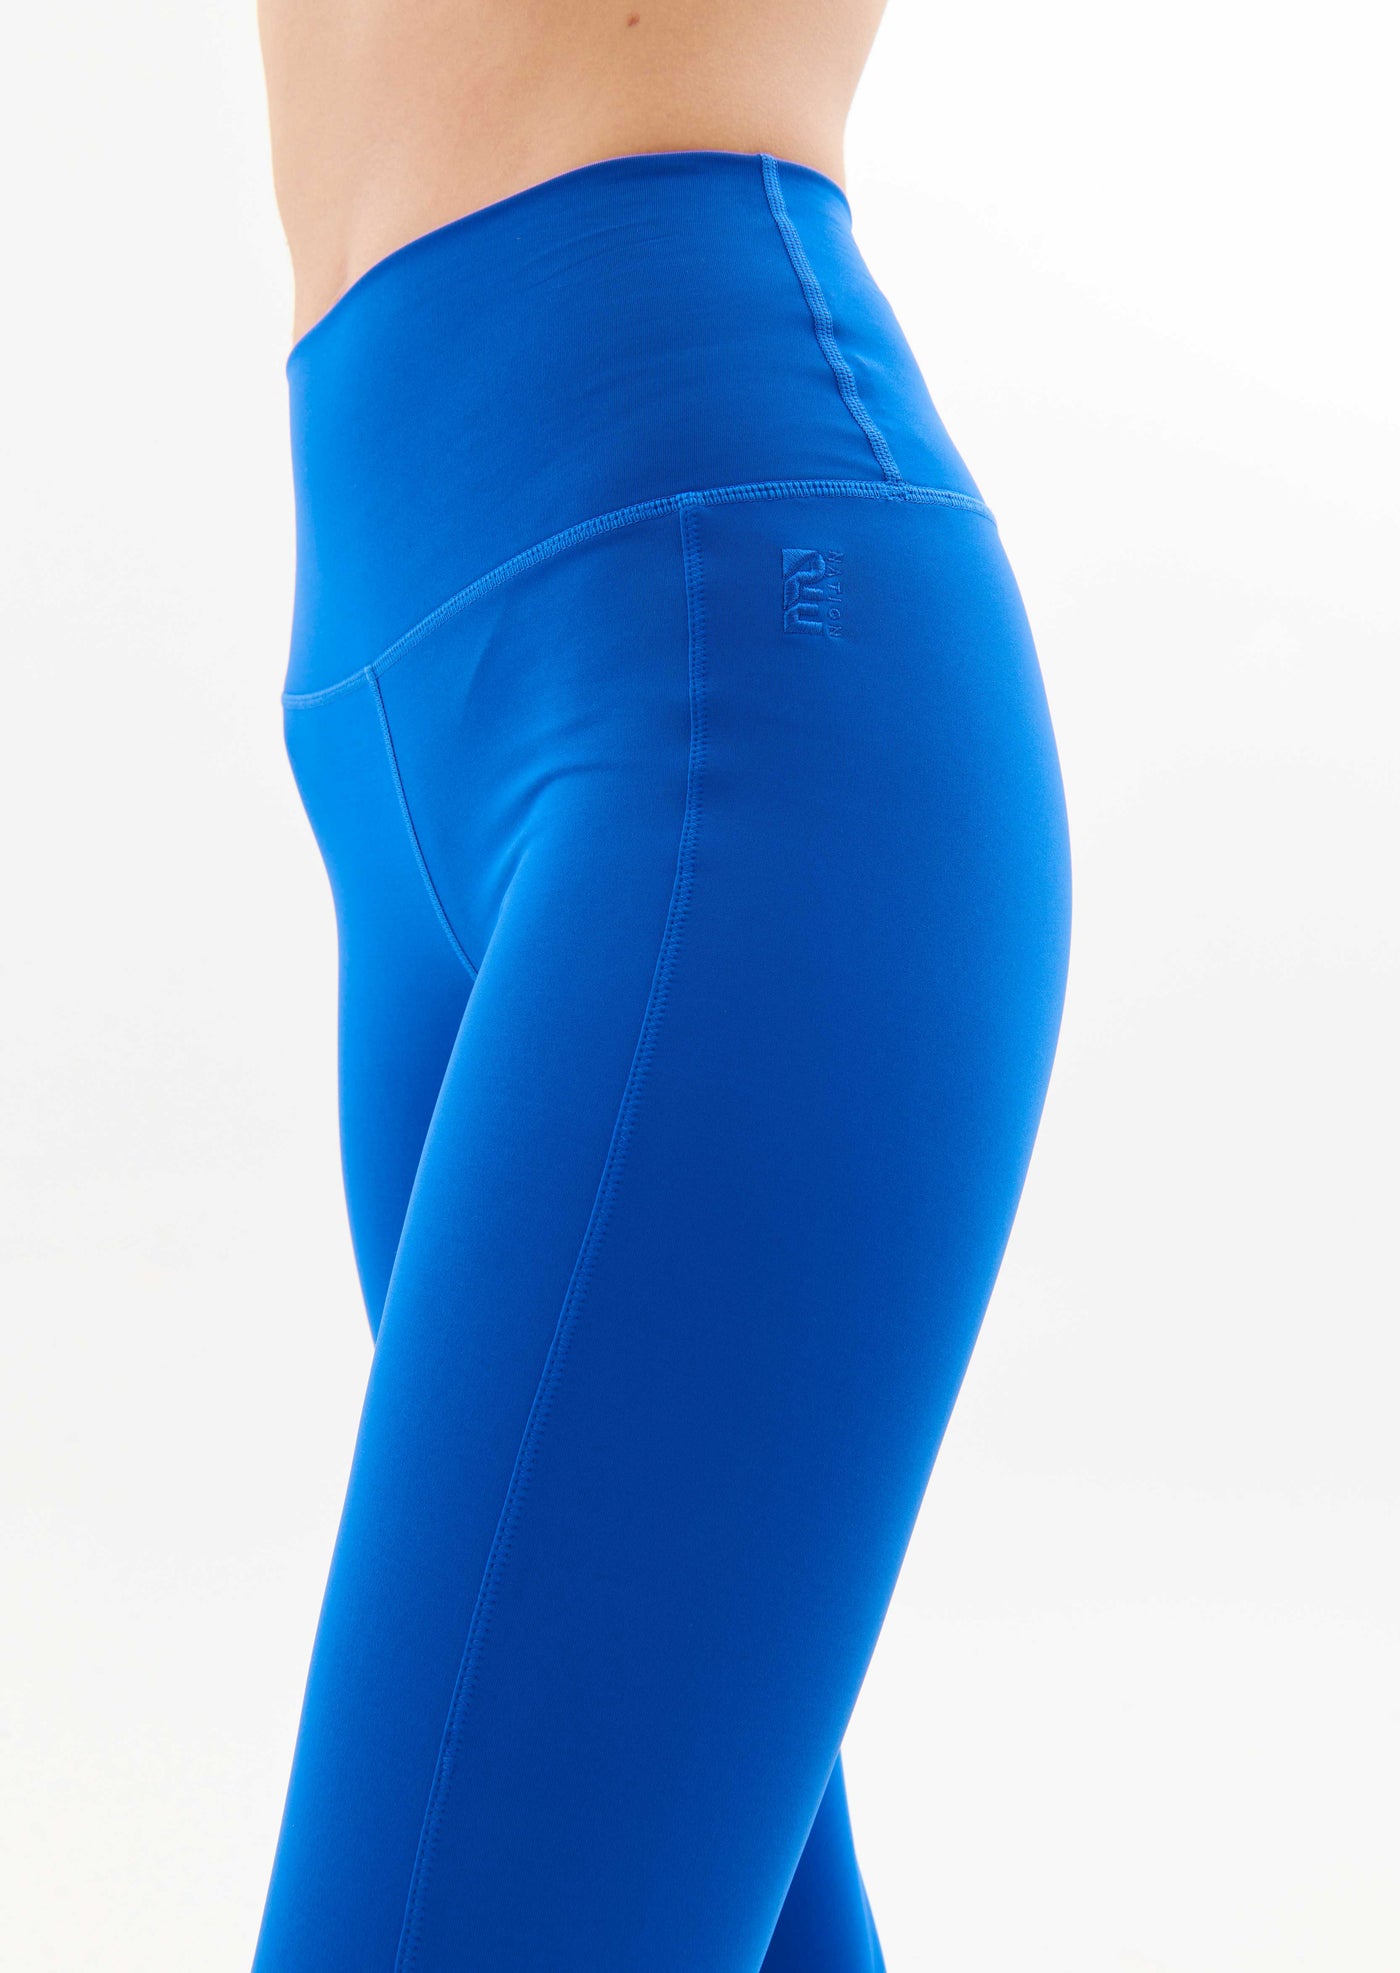 Amplify Legging - Mystic Blue  Bottom clothes, High waisted leggings, Women